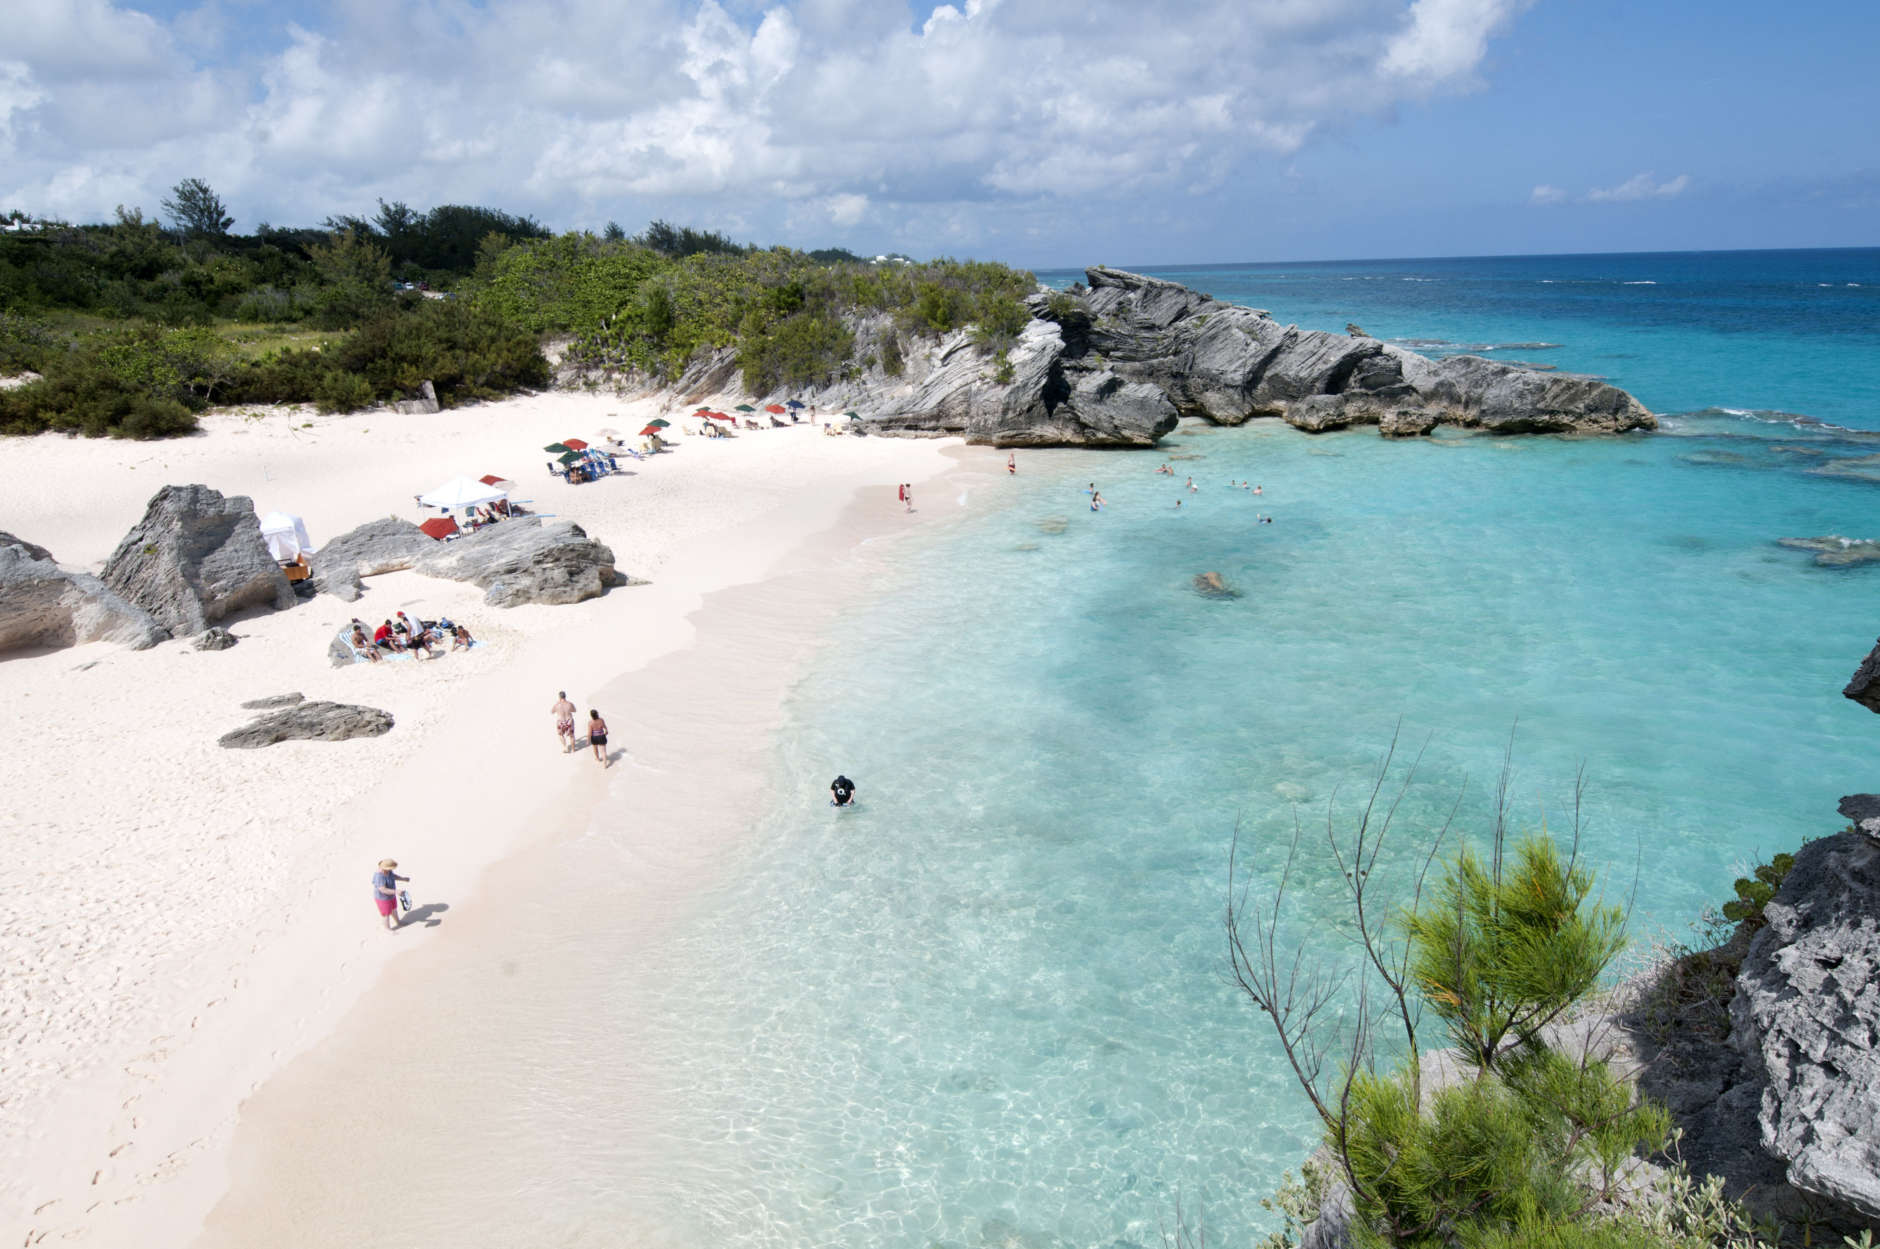 Bermuda is located in the North Atlantic Ocean